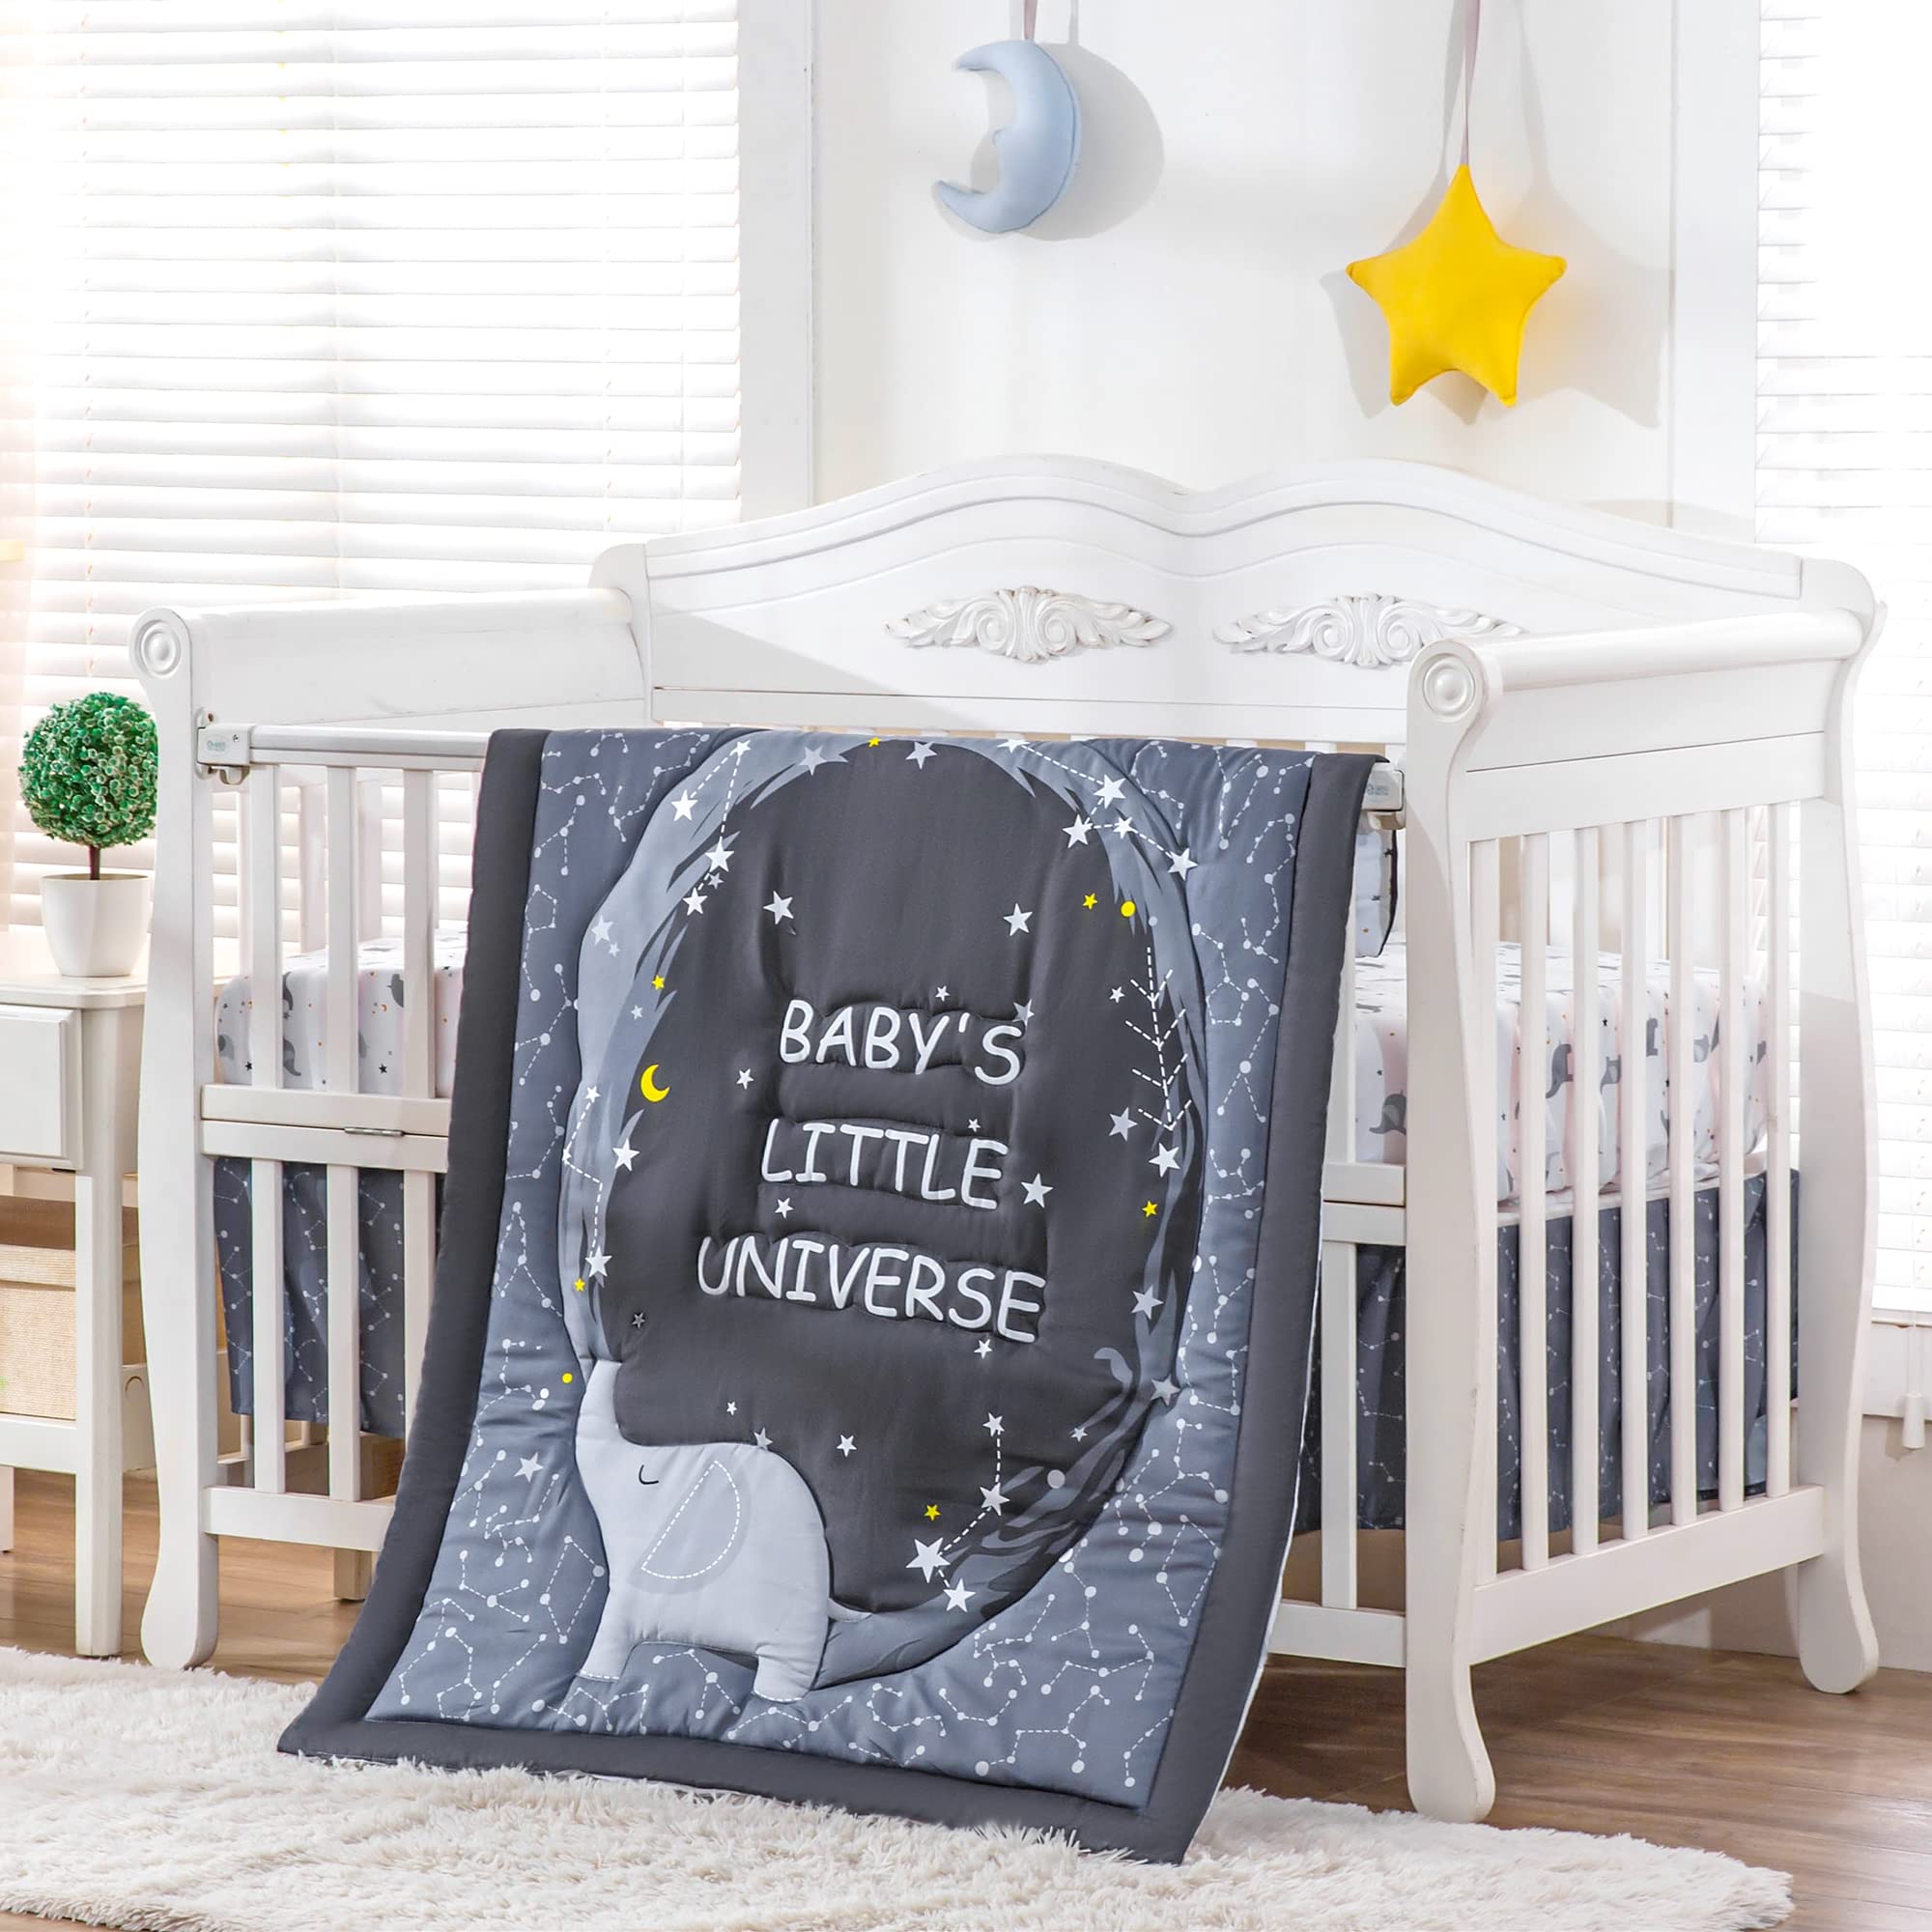 Jupeollon 3Piece Baby Crib Bedding Set for Boys Elephant Moon Star Themed Nursery Bedding Crib Sets for Boys Soft Breathable Included Crib Comforter Fitted Sheet Crib Skirt,Grey